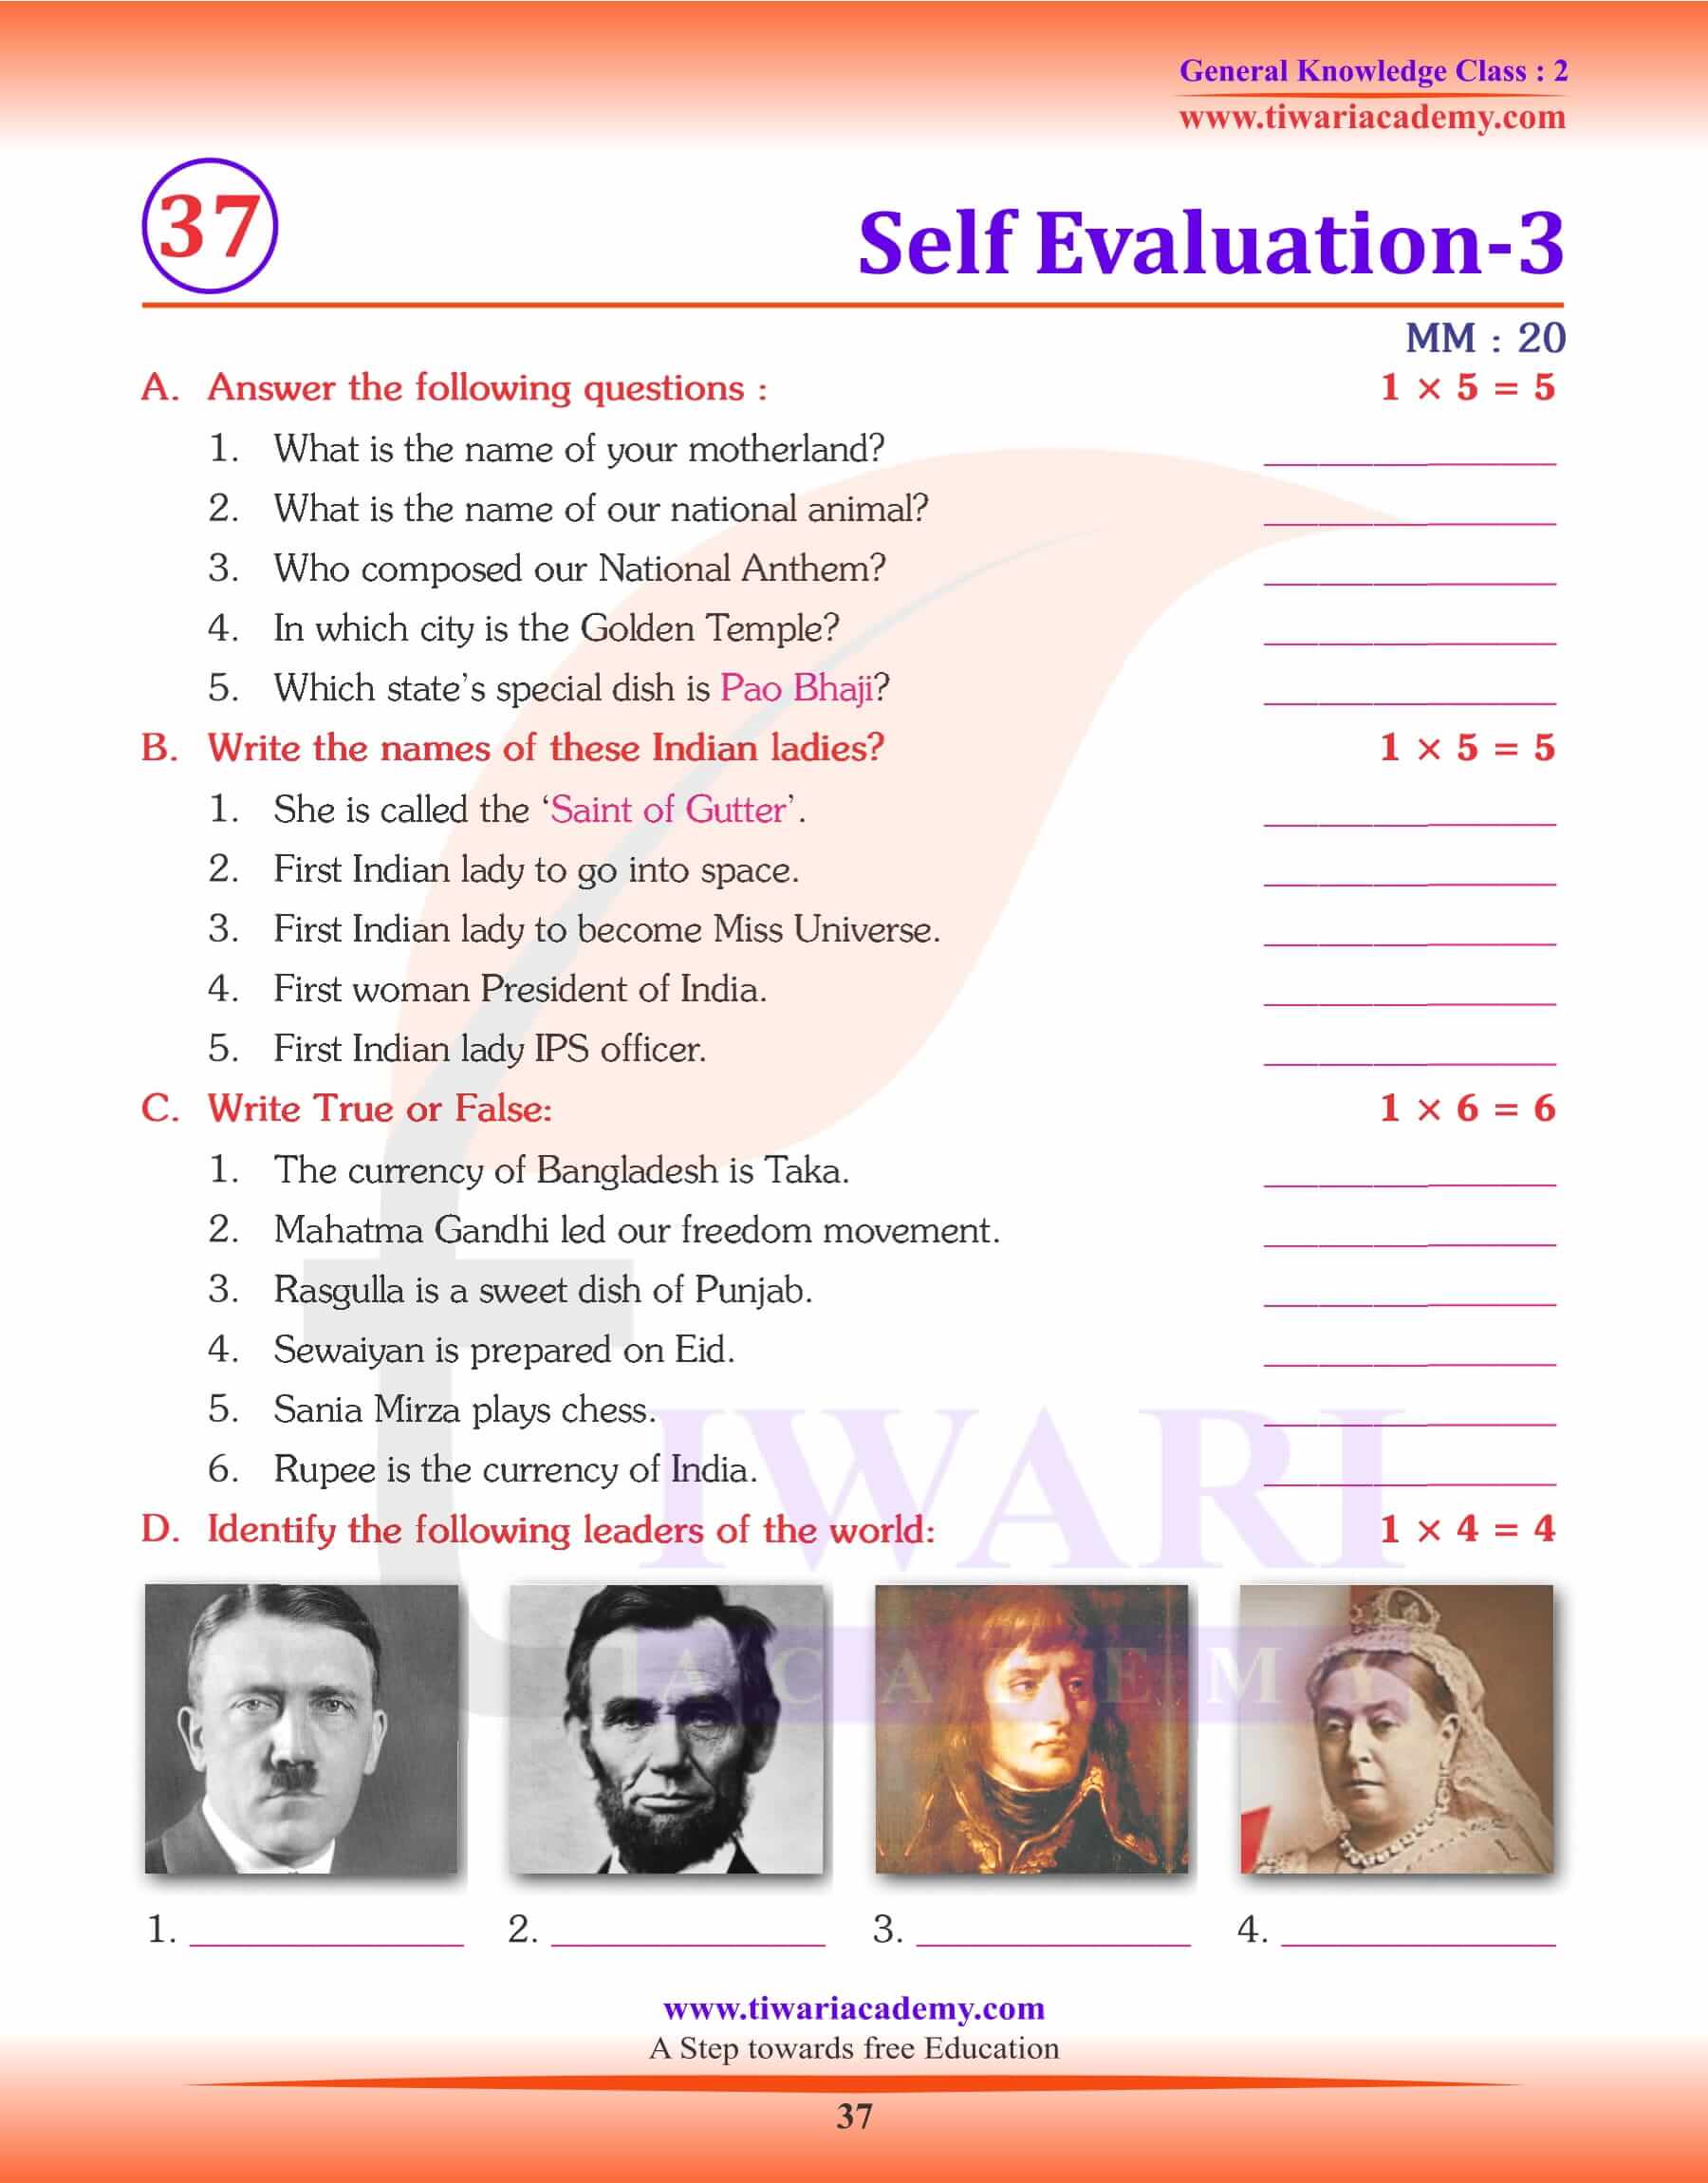 Self Evaluation GK Test 3